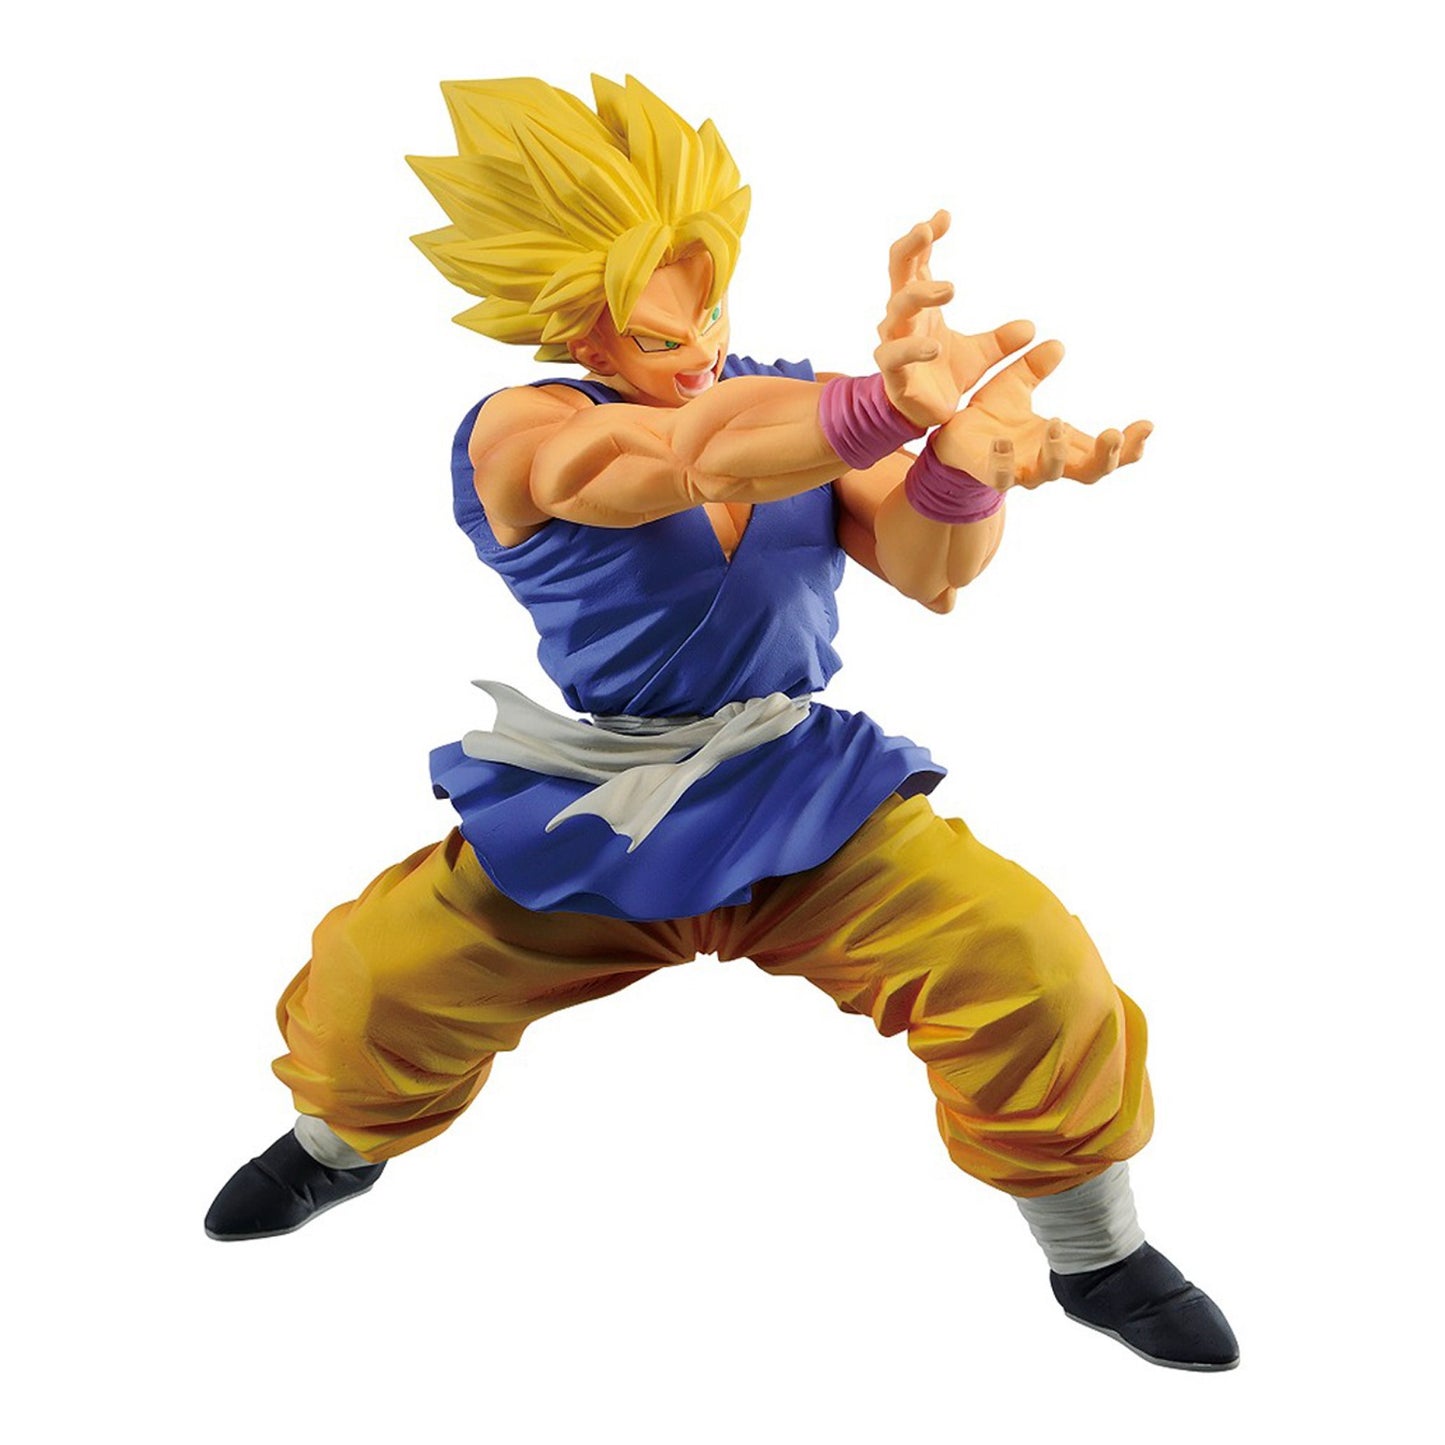 Banpresto x Bandai: Dragon Ball GT - Ultimate Soldiers Ver. B Super Saiyan Son Goku Figure